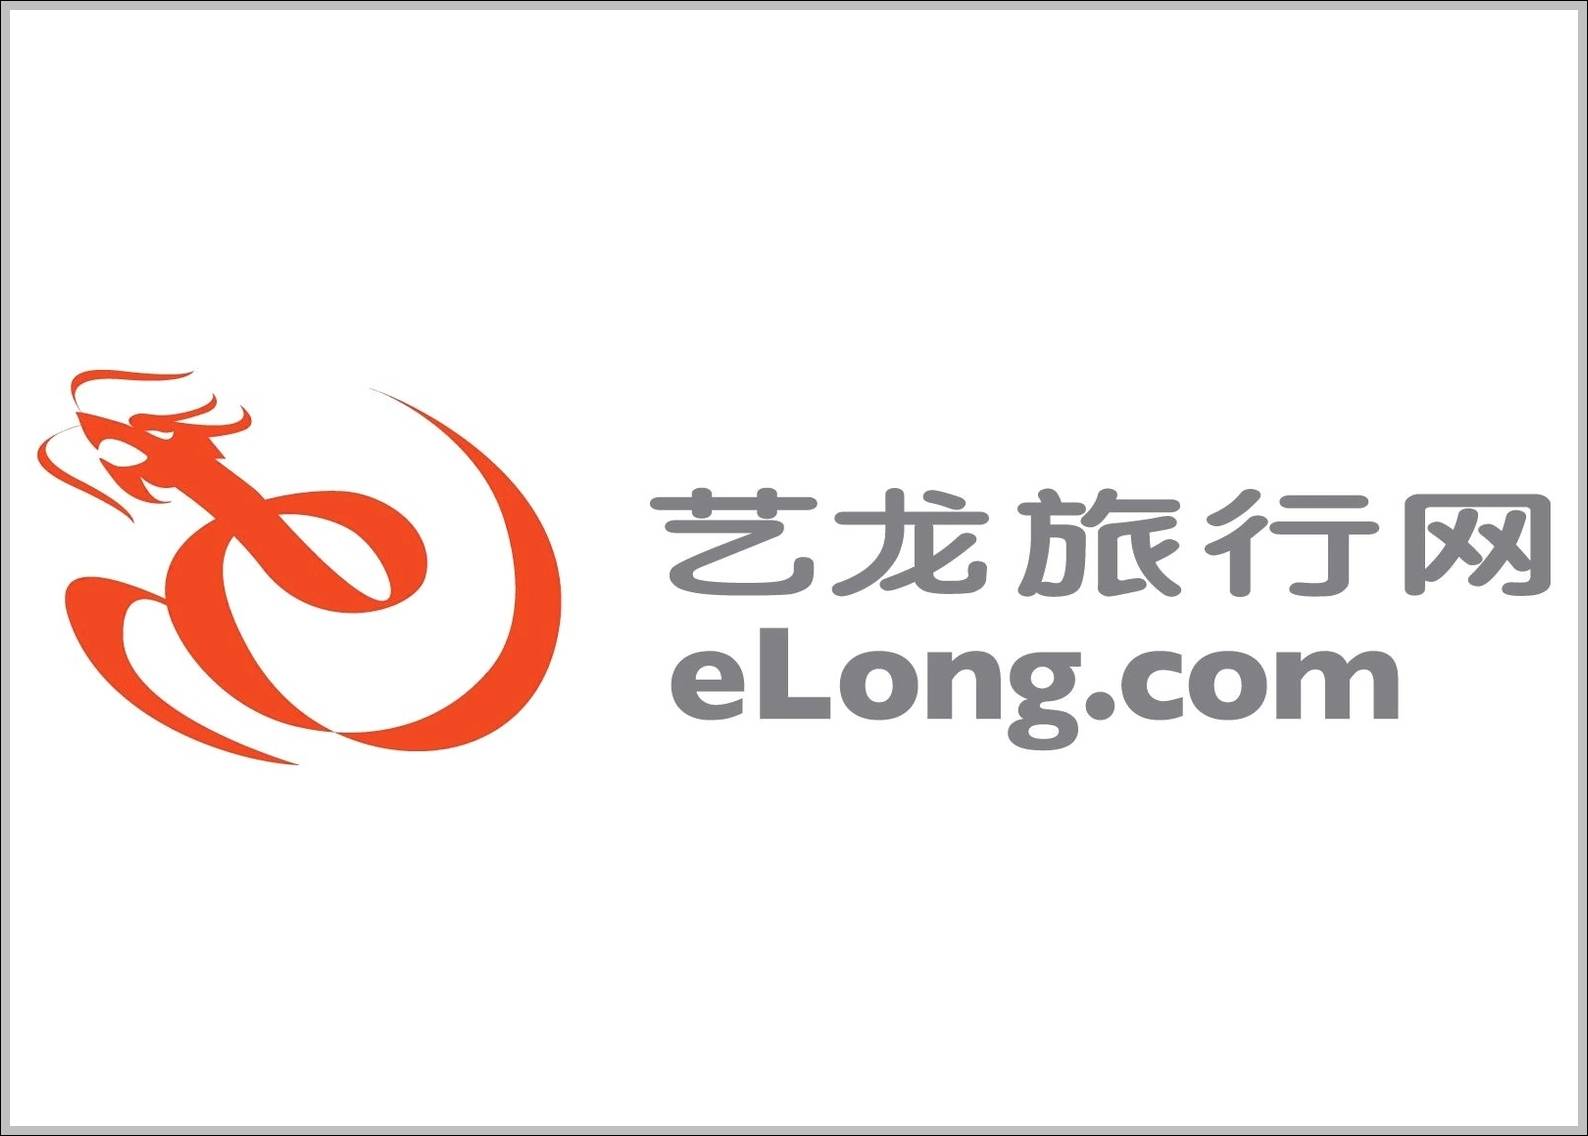 elong logo old